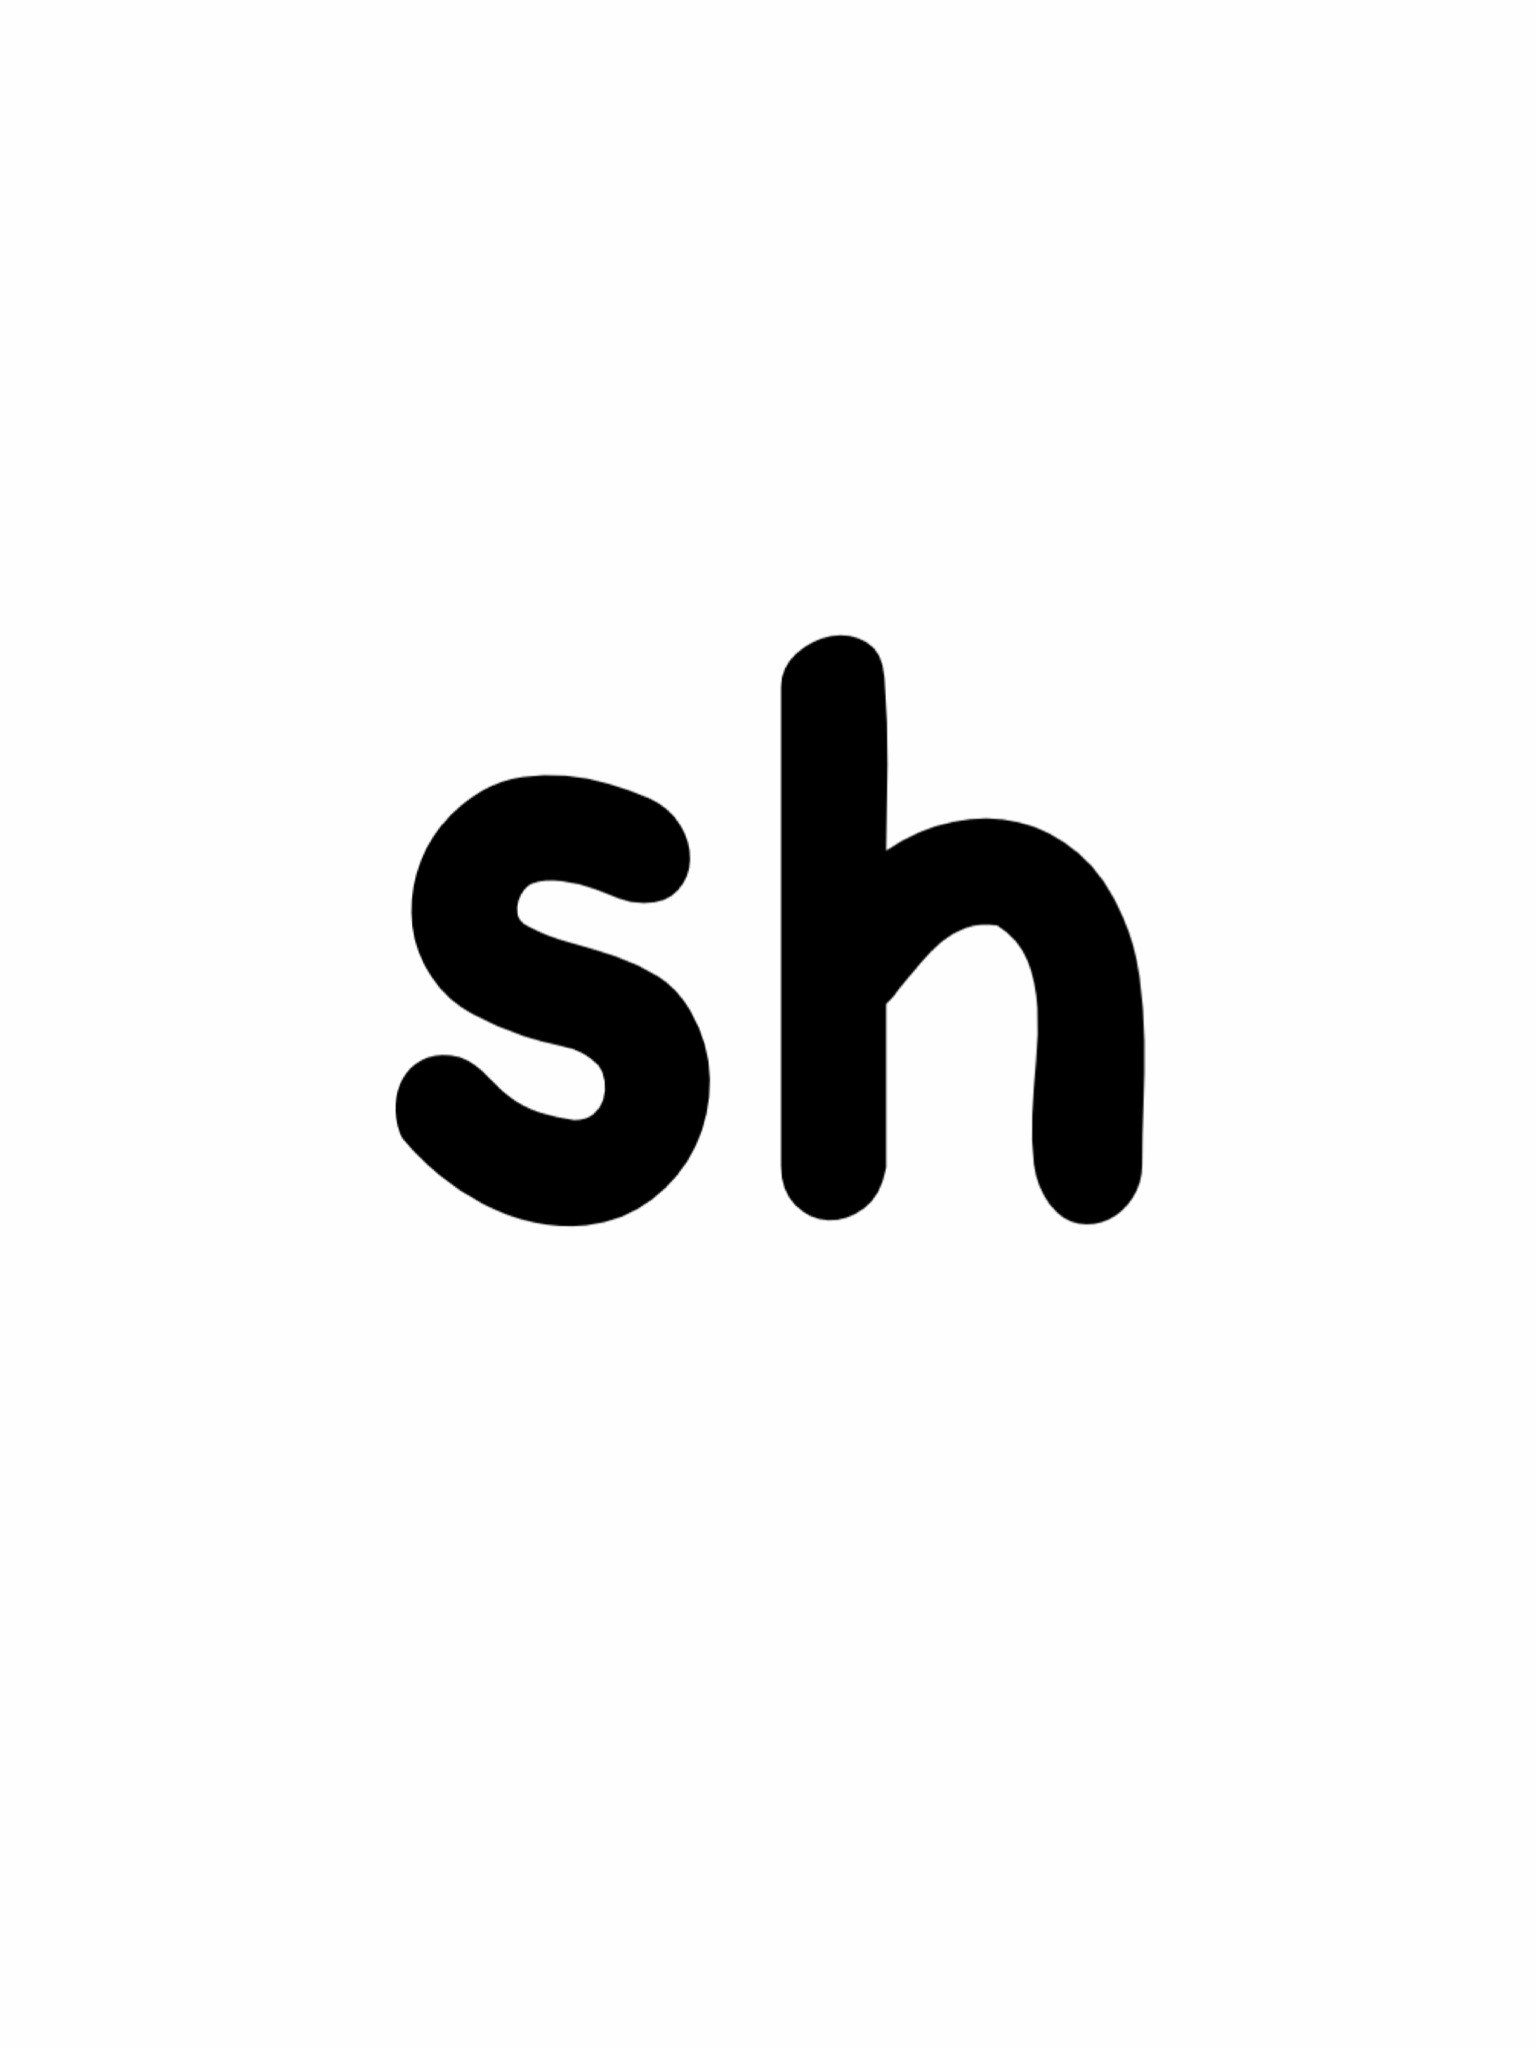 Consonant Digraph Resources - 'SH' — Dyslexic Logic